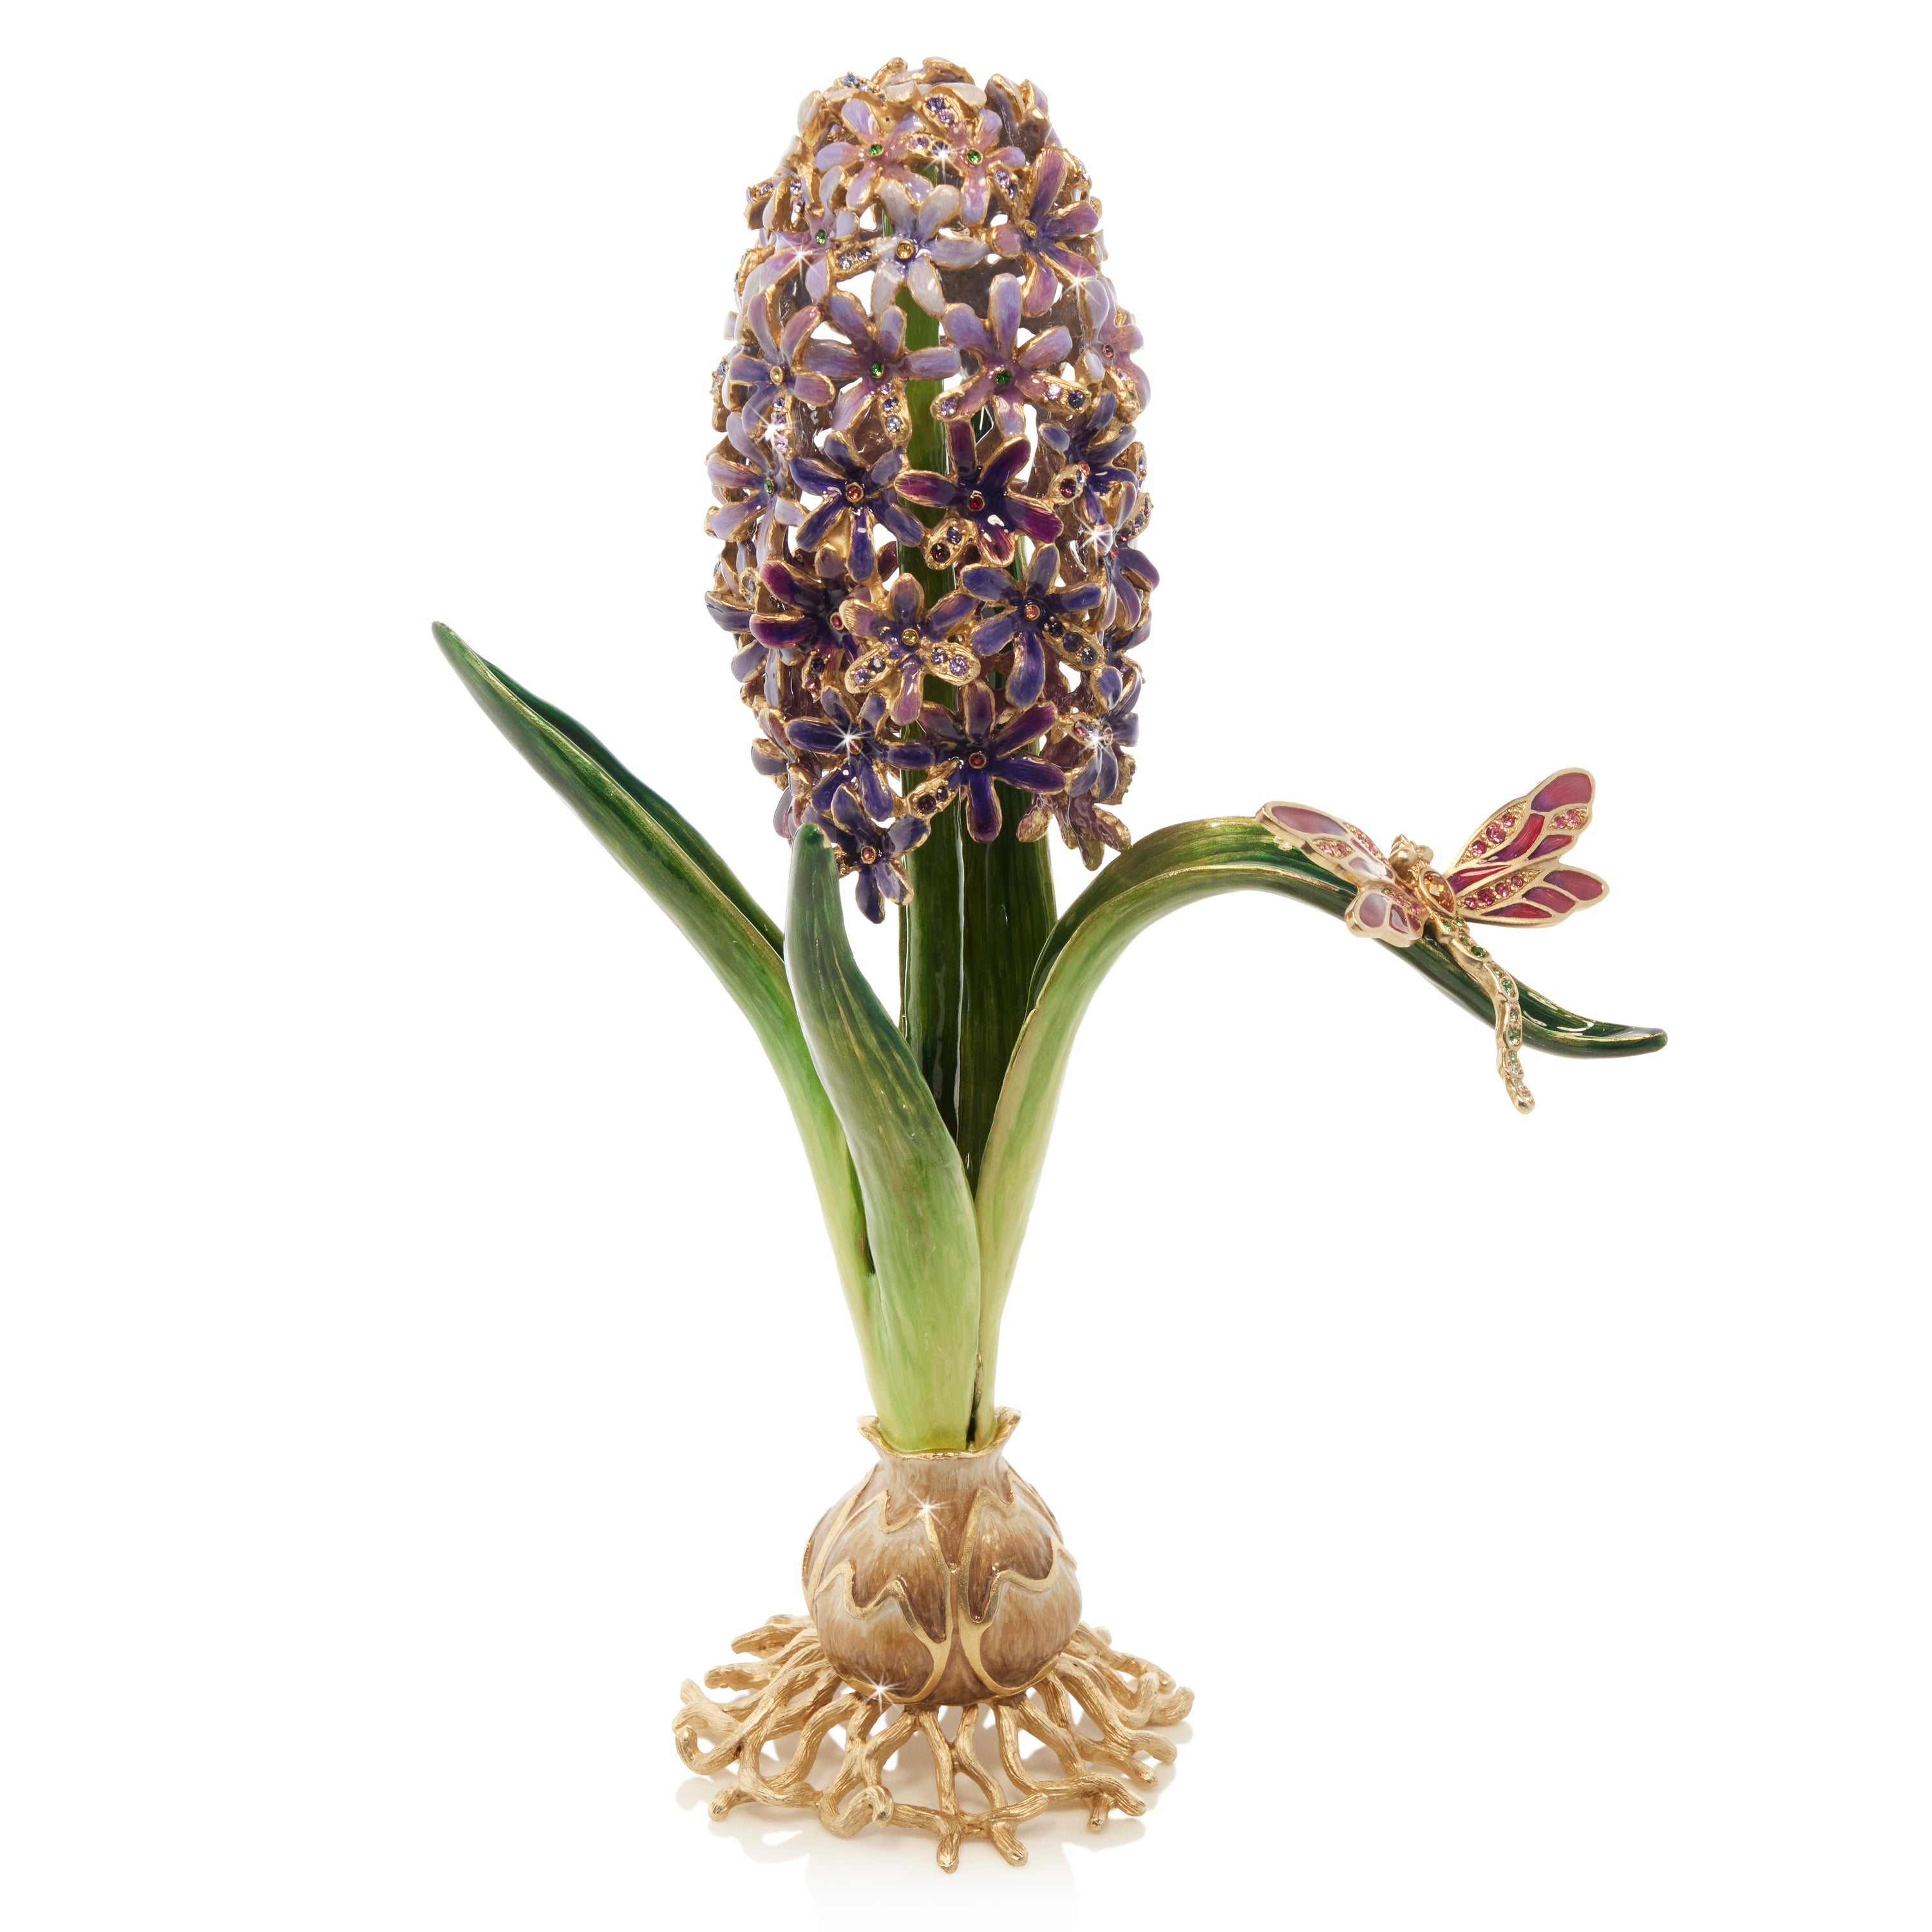 Sutton Hyacinth Flower Objet